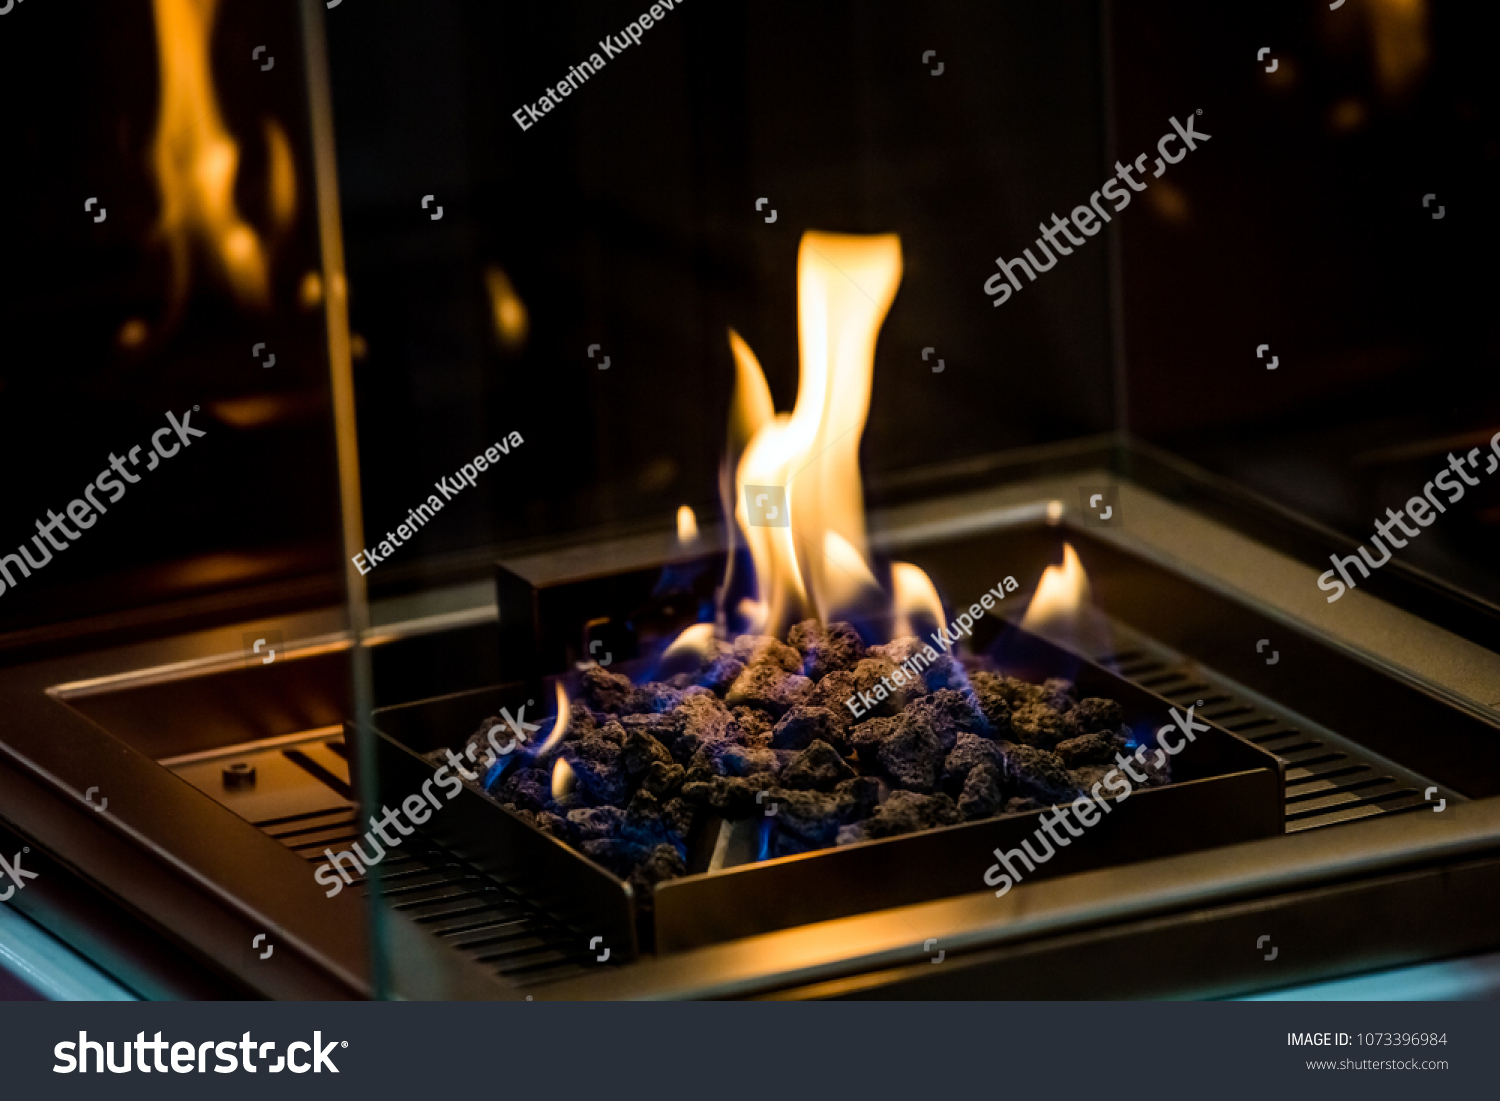 25 Best Images Gas Fireplace Decorative Stones / Stone Gas Fireplace Decoration Free 3d Model Max Vray Open3dmodel 197220